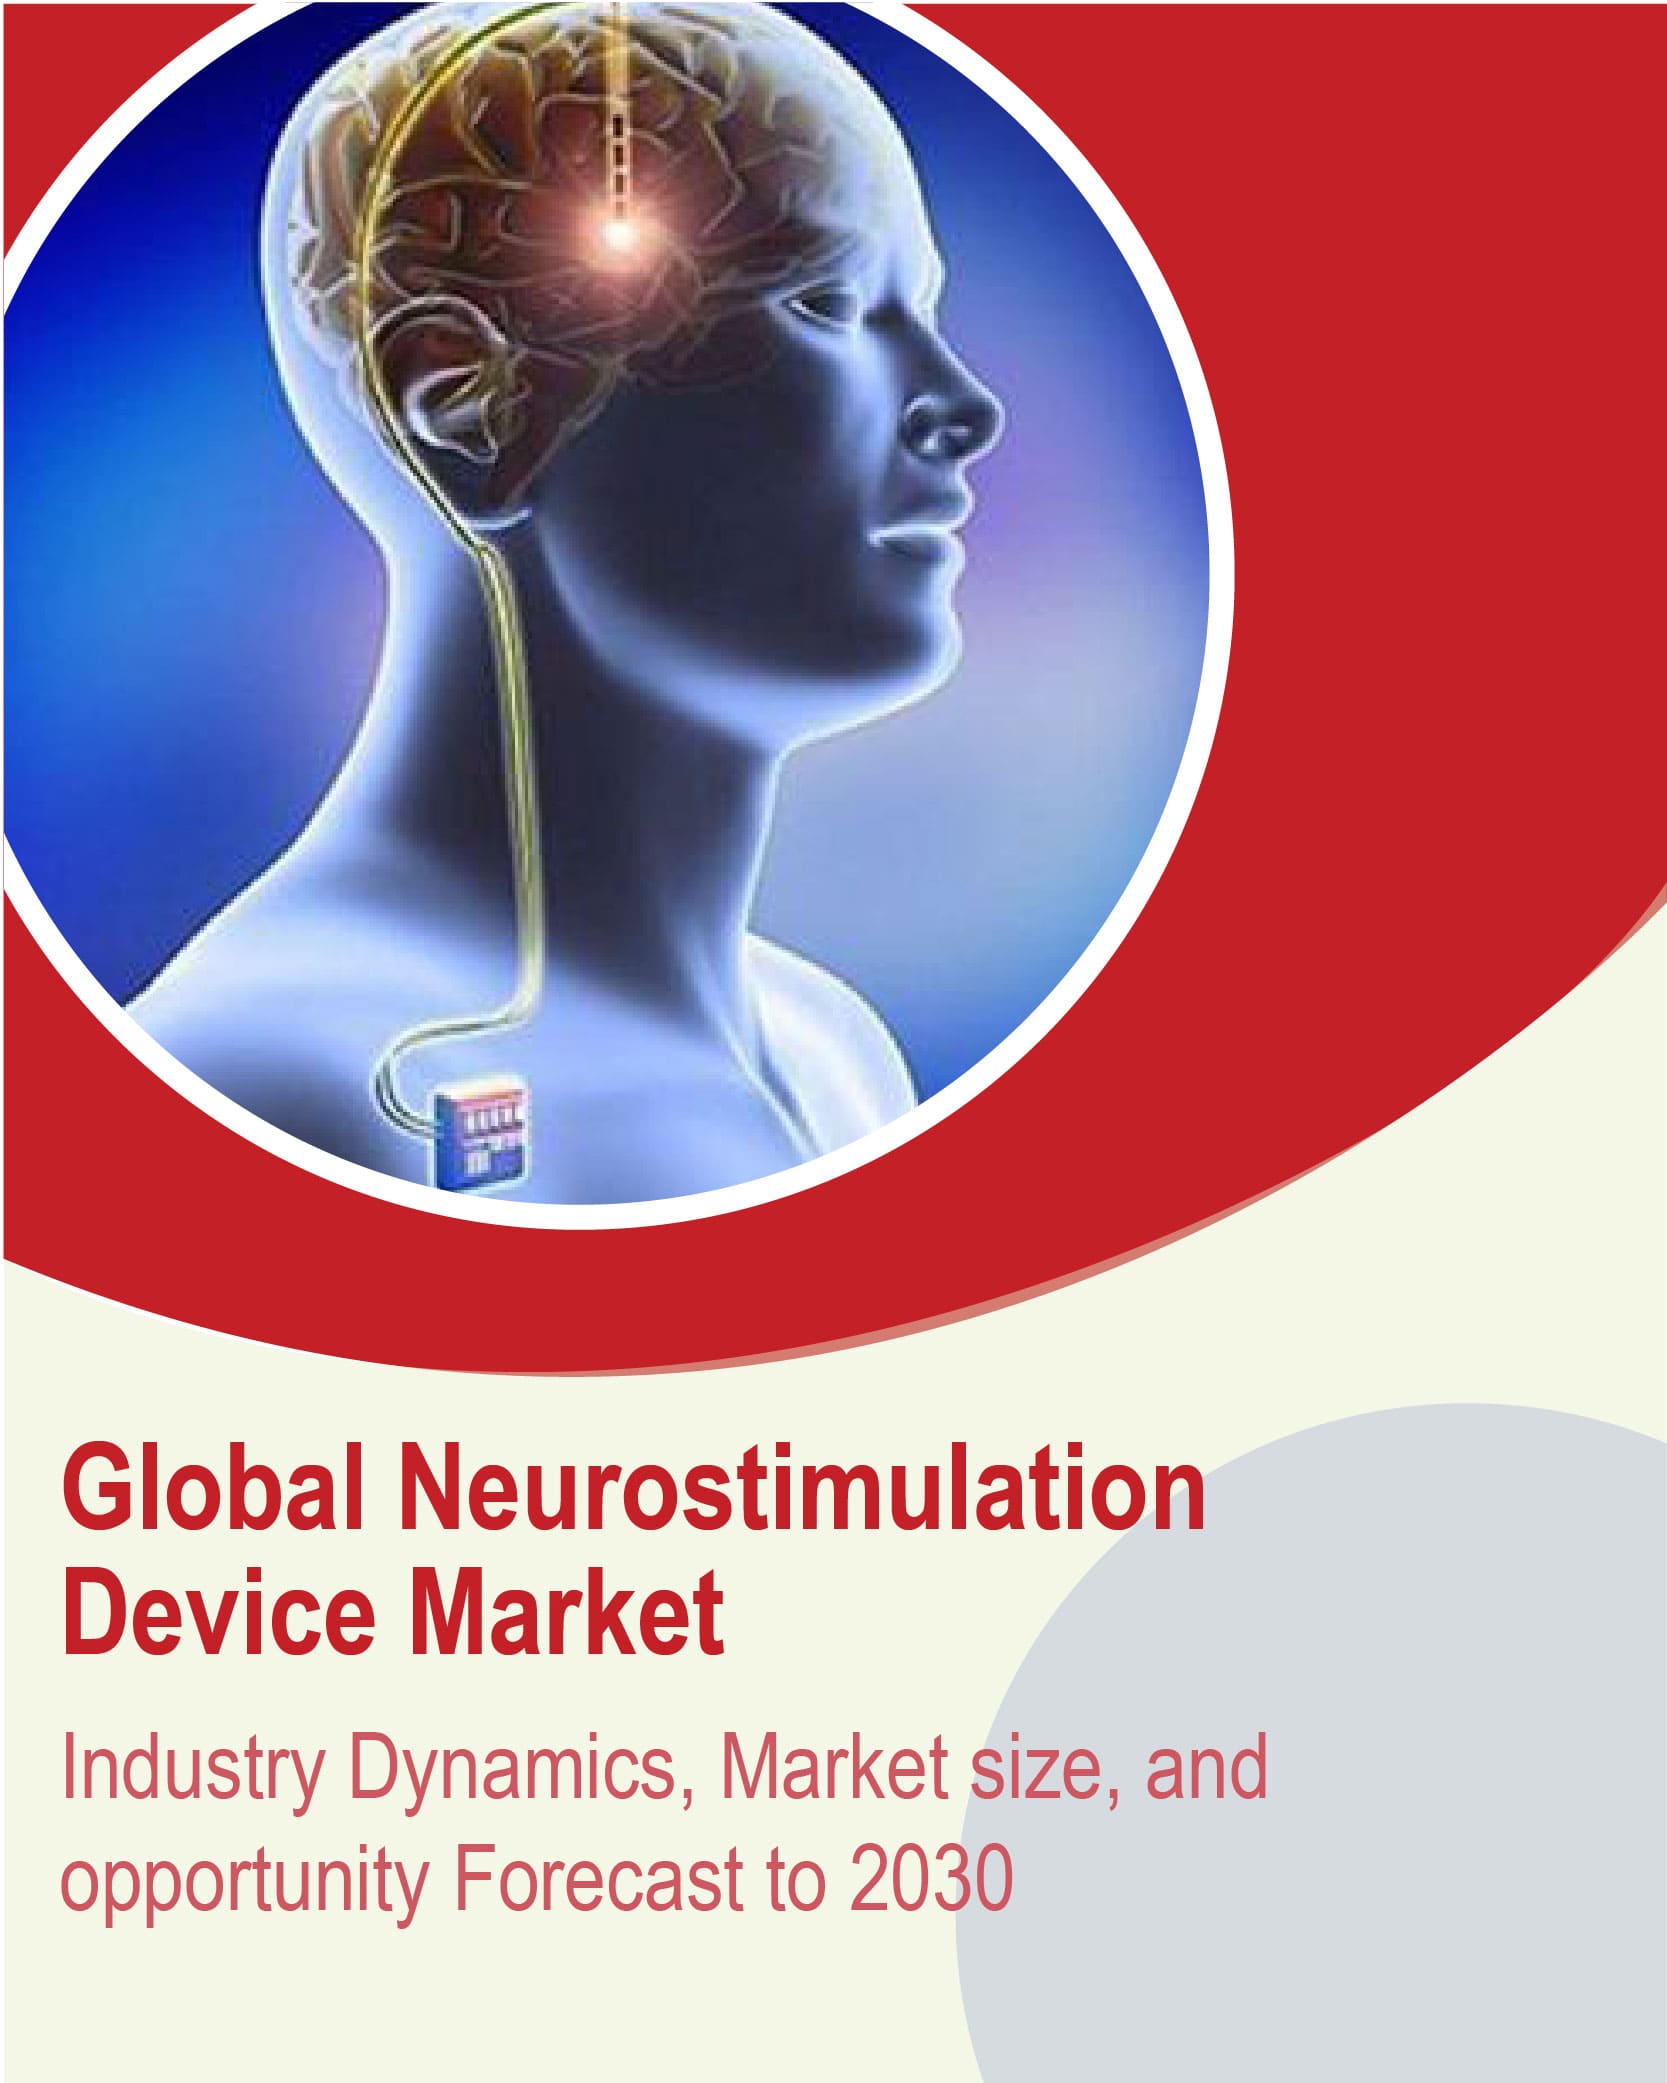 Neurostimulation Devices Market